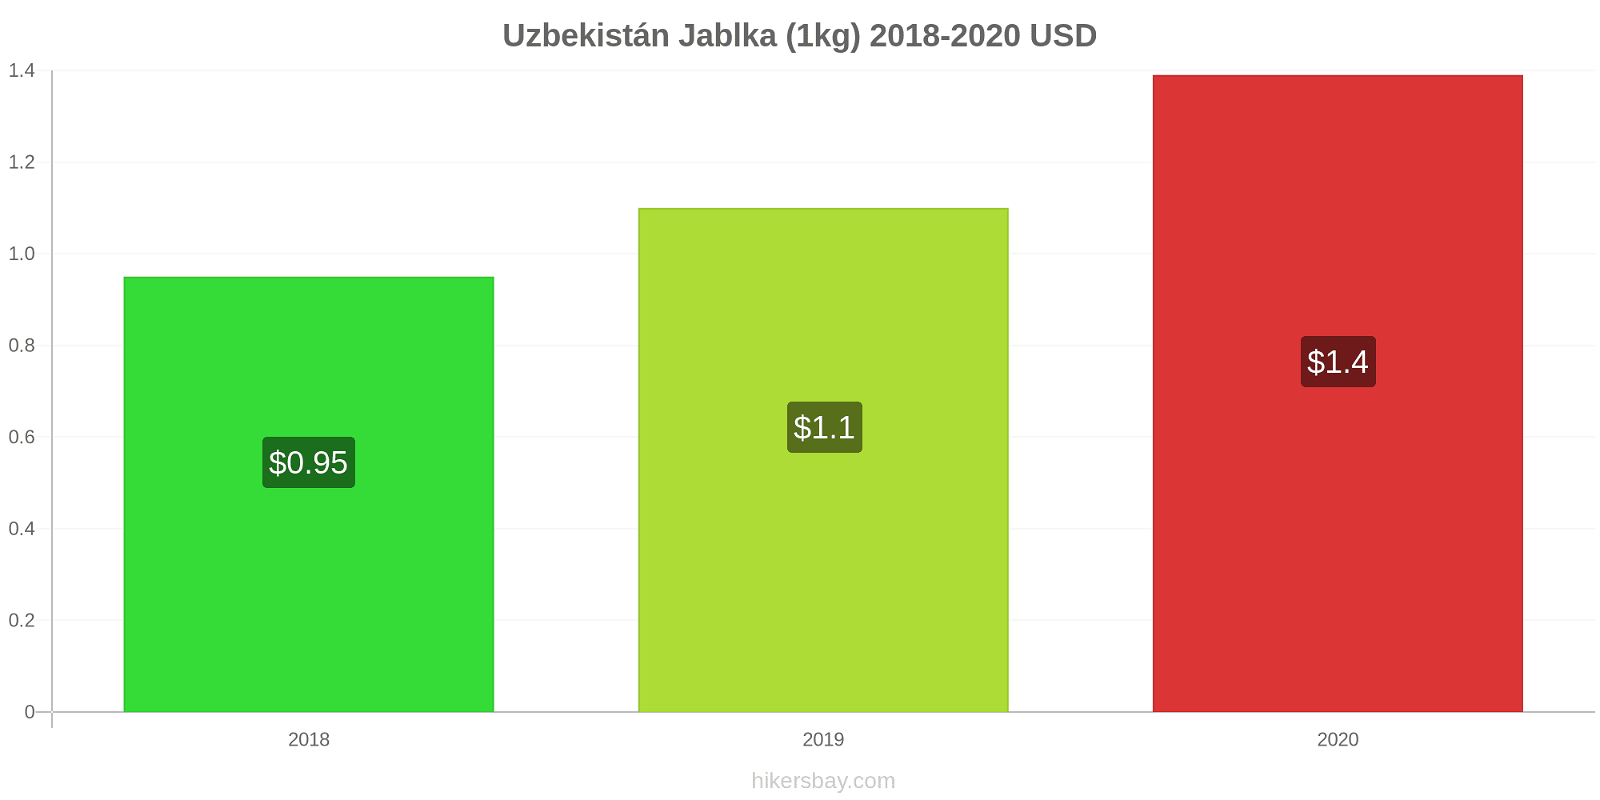 Uzbekistán změny cen Jablka (1kg) hikersbay.com